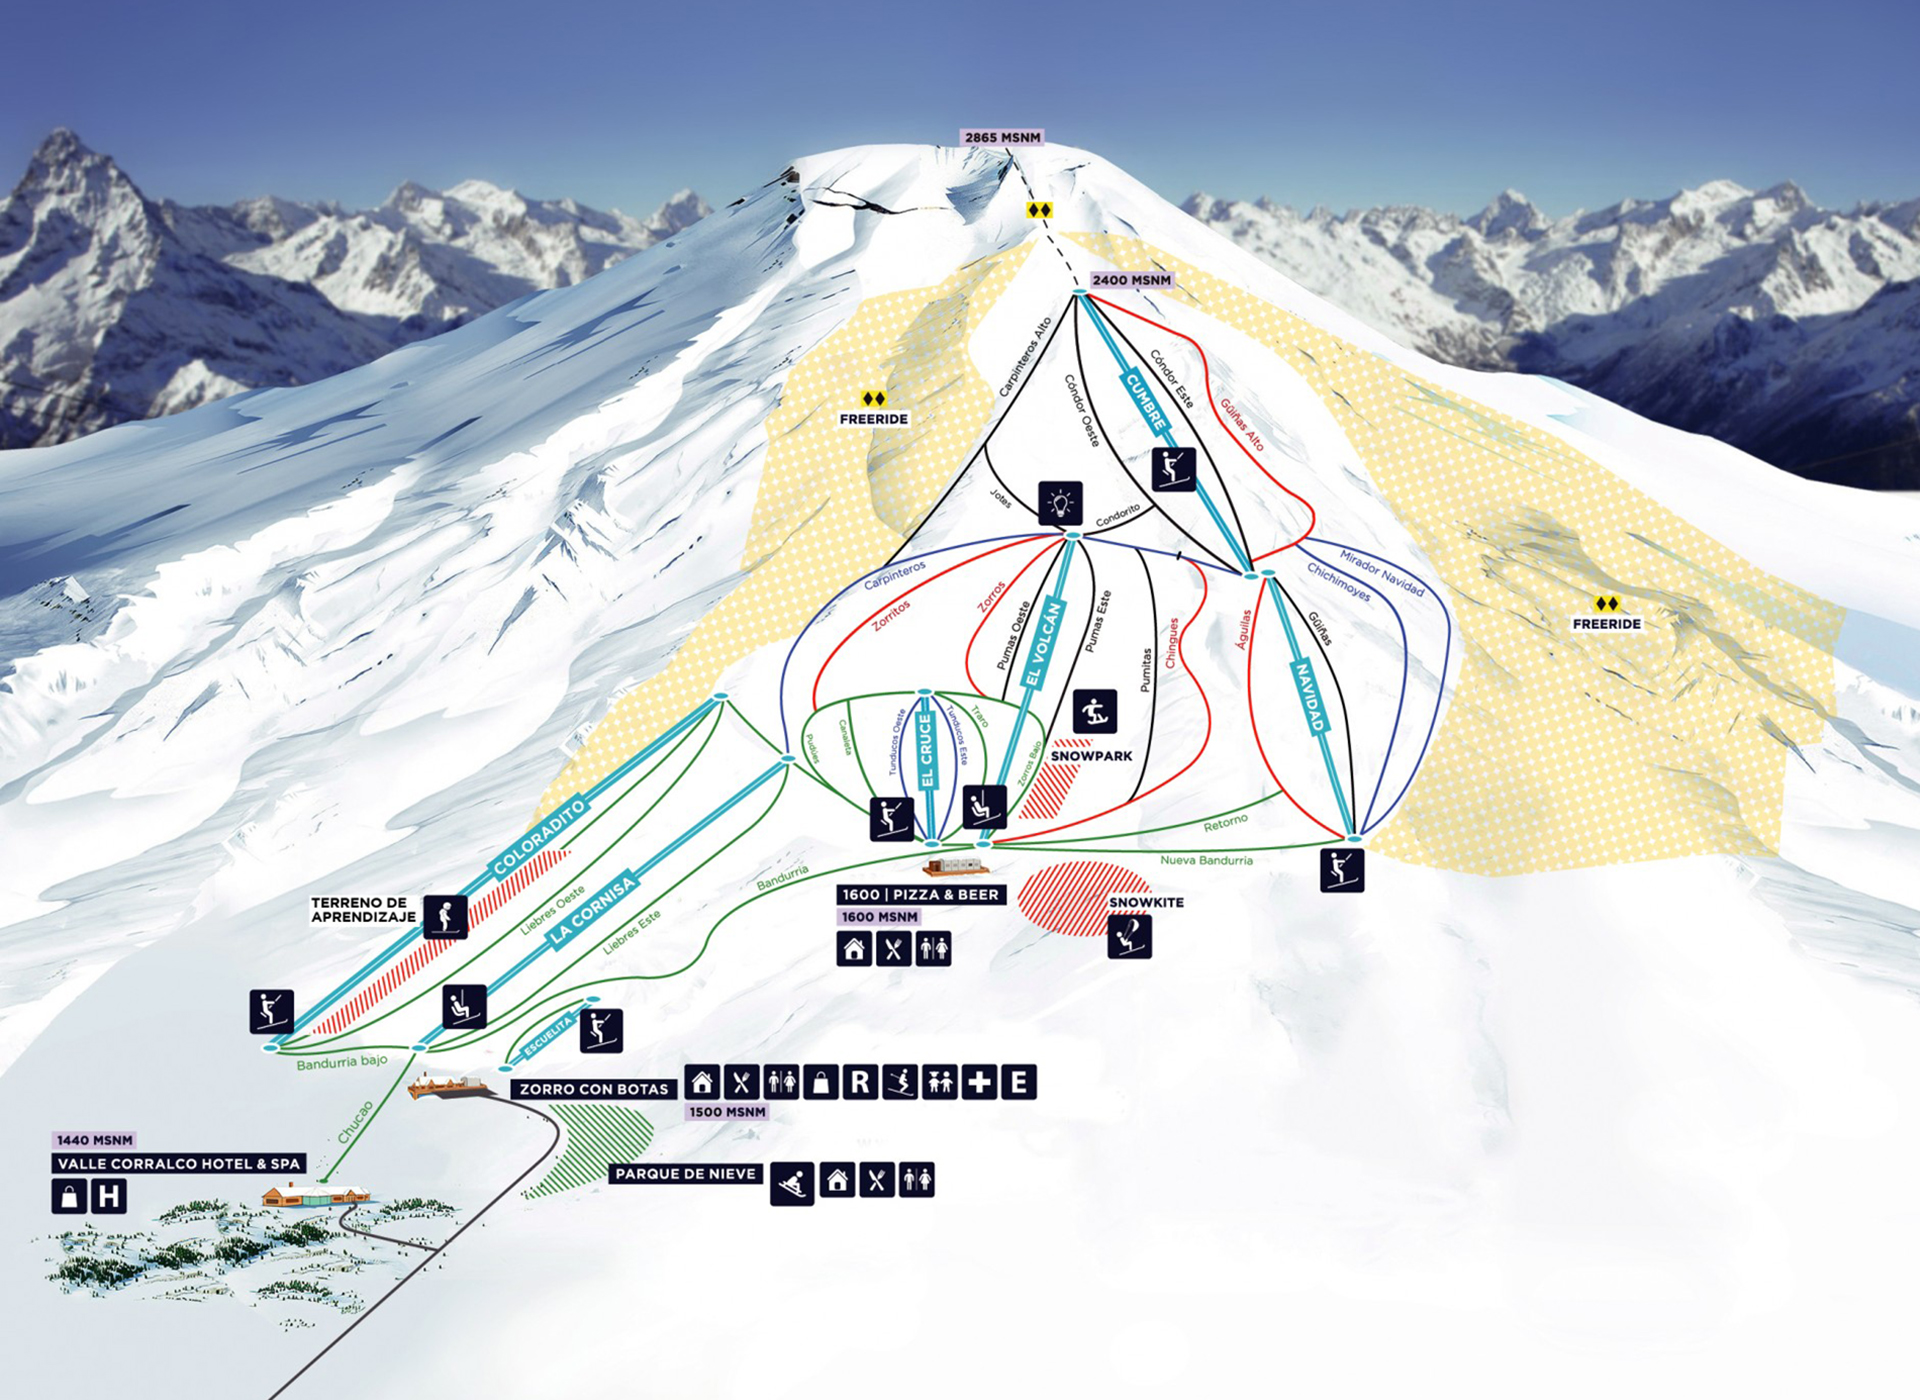 Corralco Ski Resort trail map